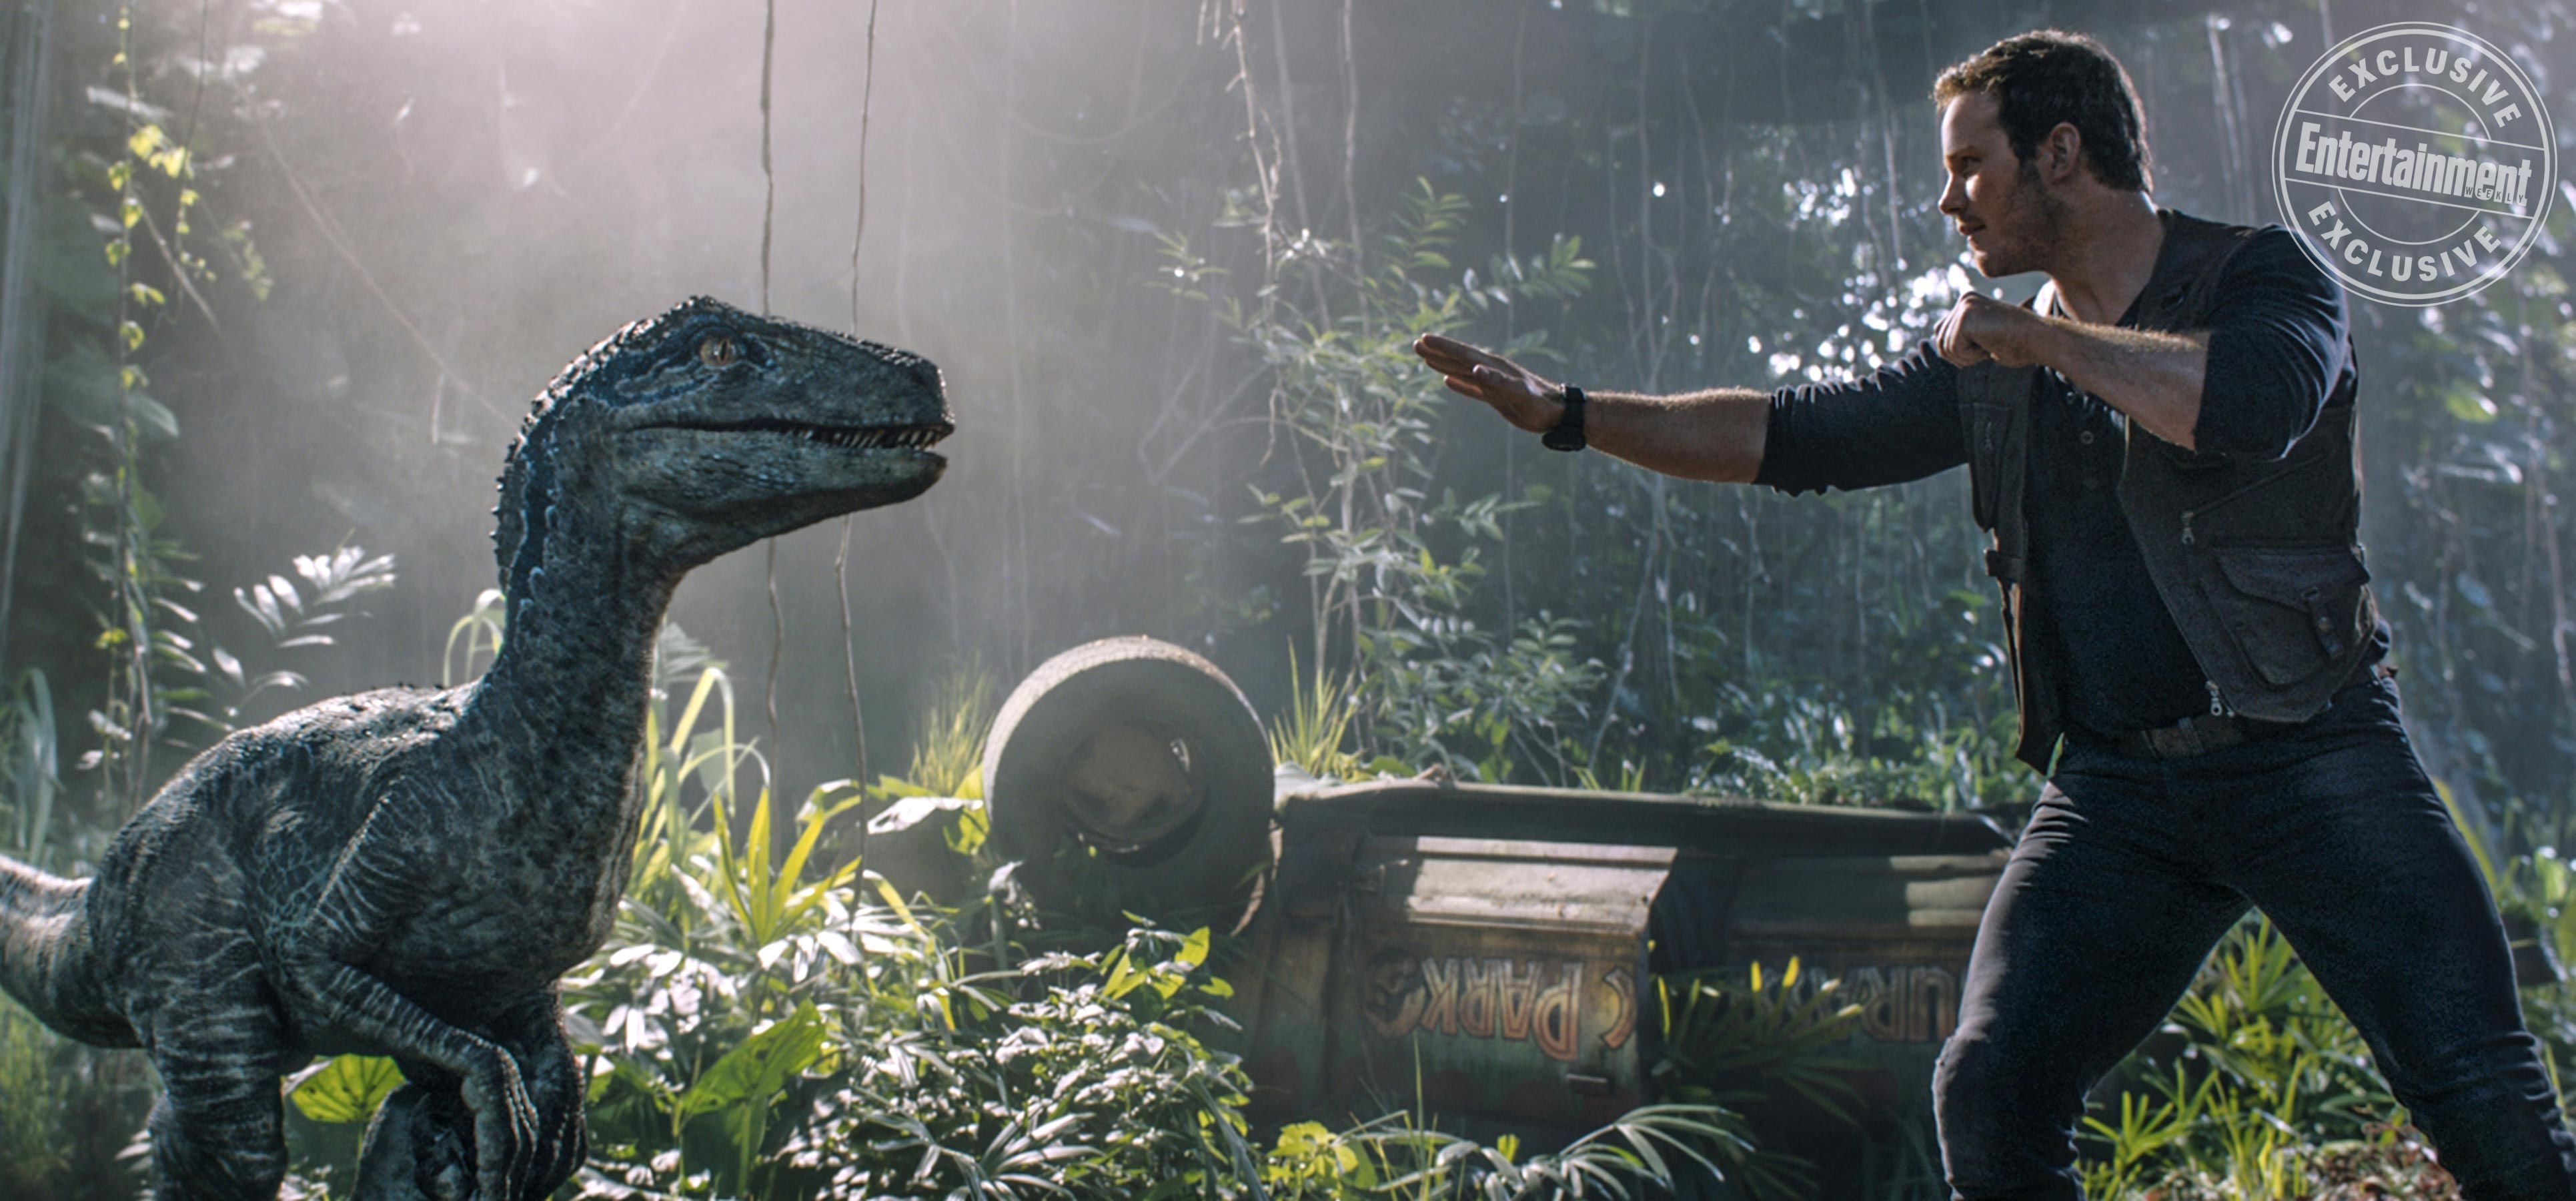 New Jurassic World: Fallen Kingdom image released!